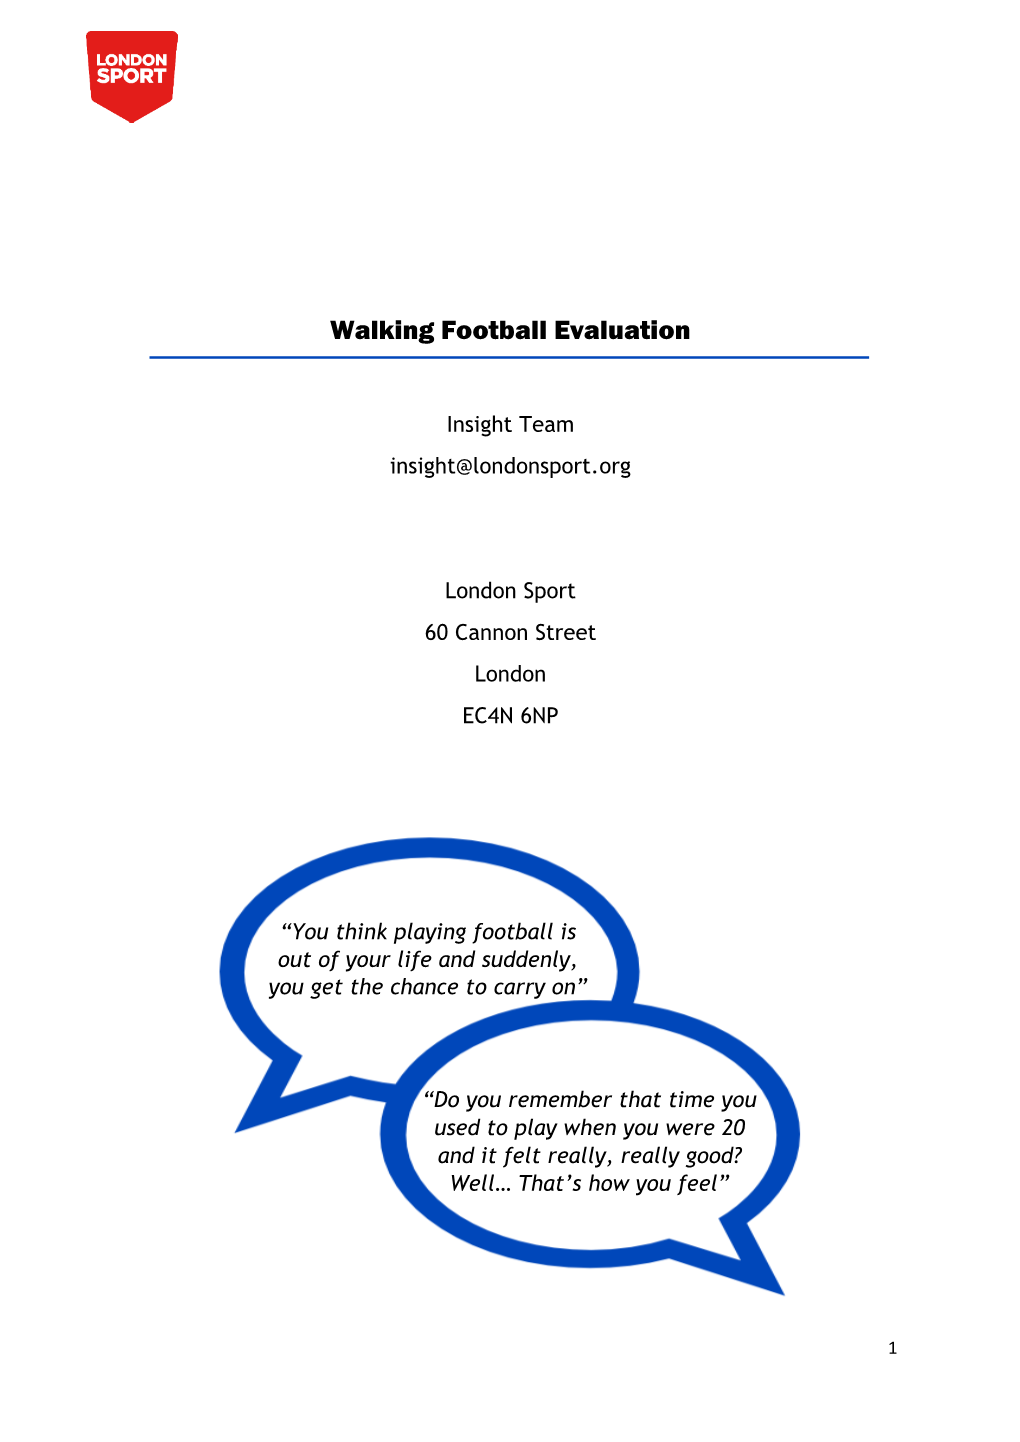 Walking Football Evaluation (Main Report)